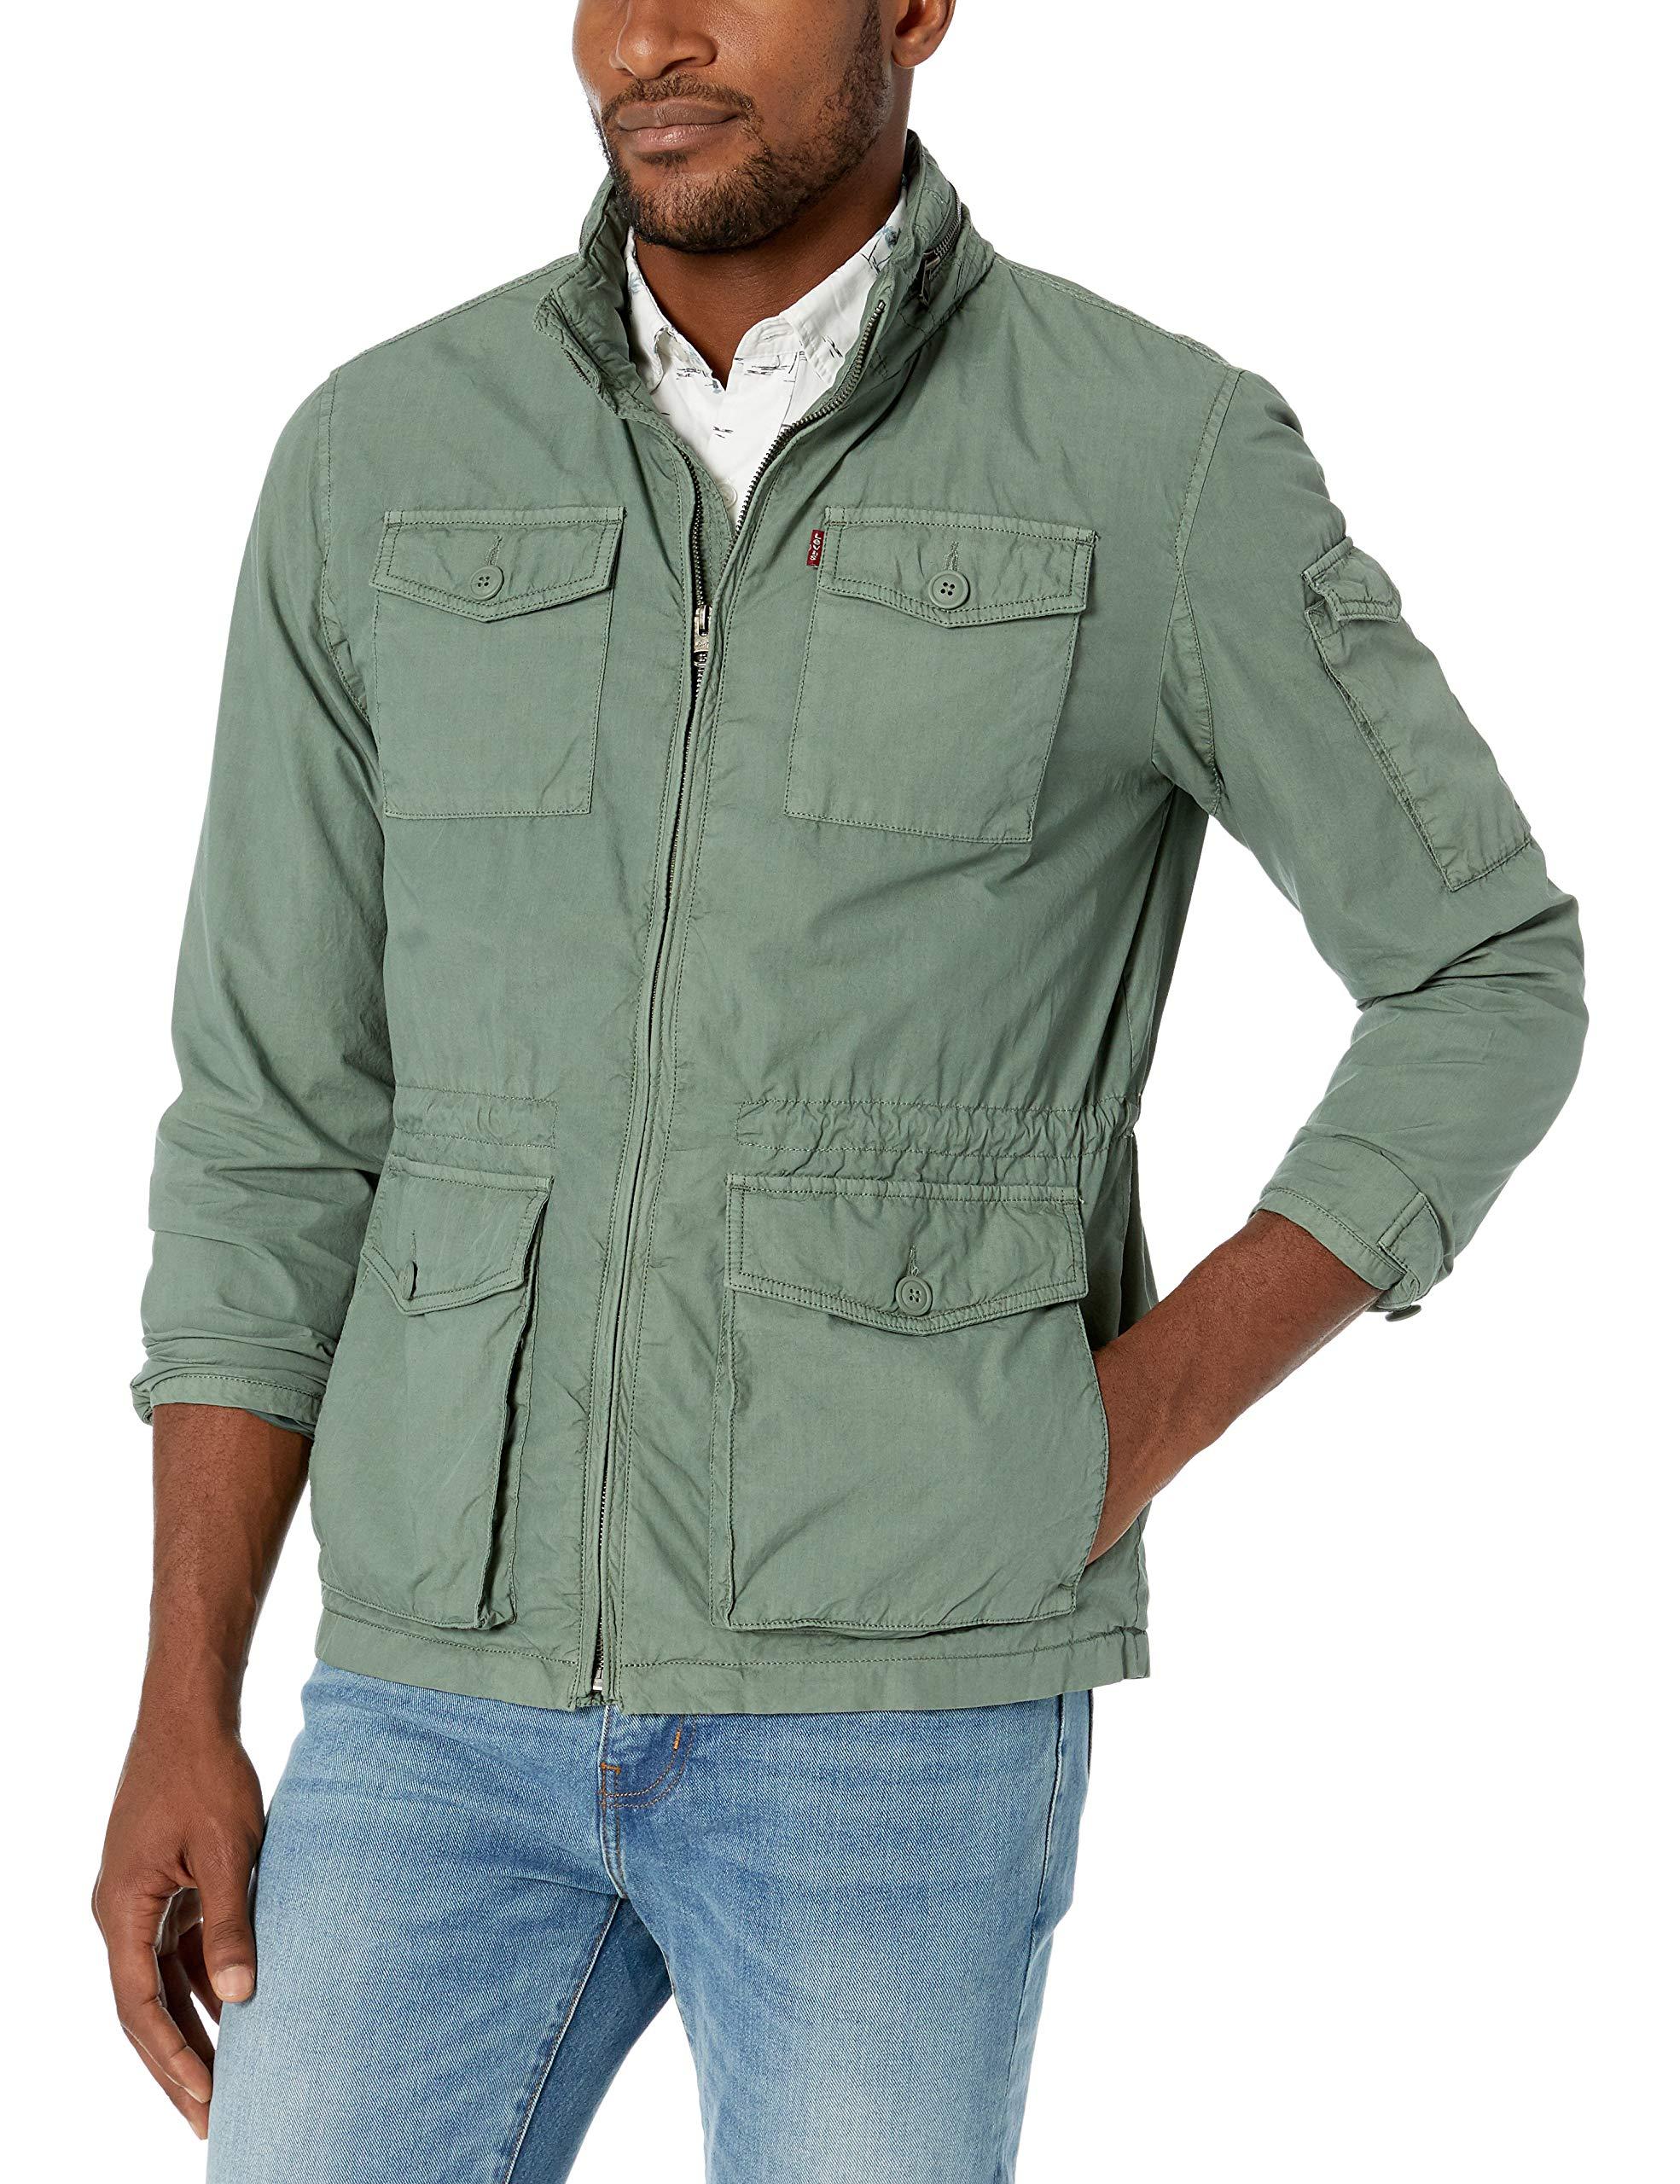 Levi's Lightweight Cotton Field Jacket in Light Green (Green) for Men - Lyst